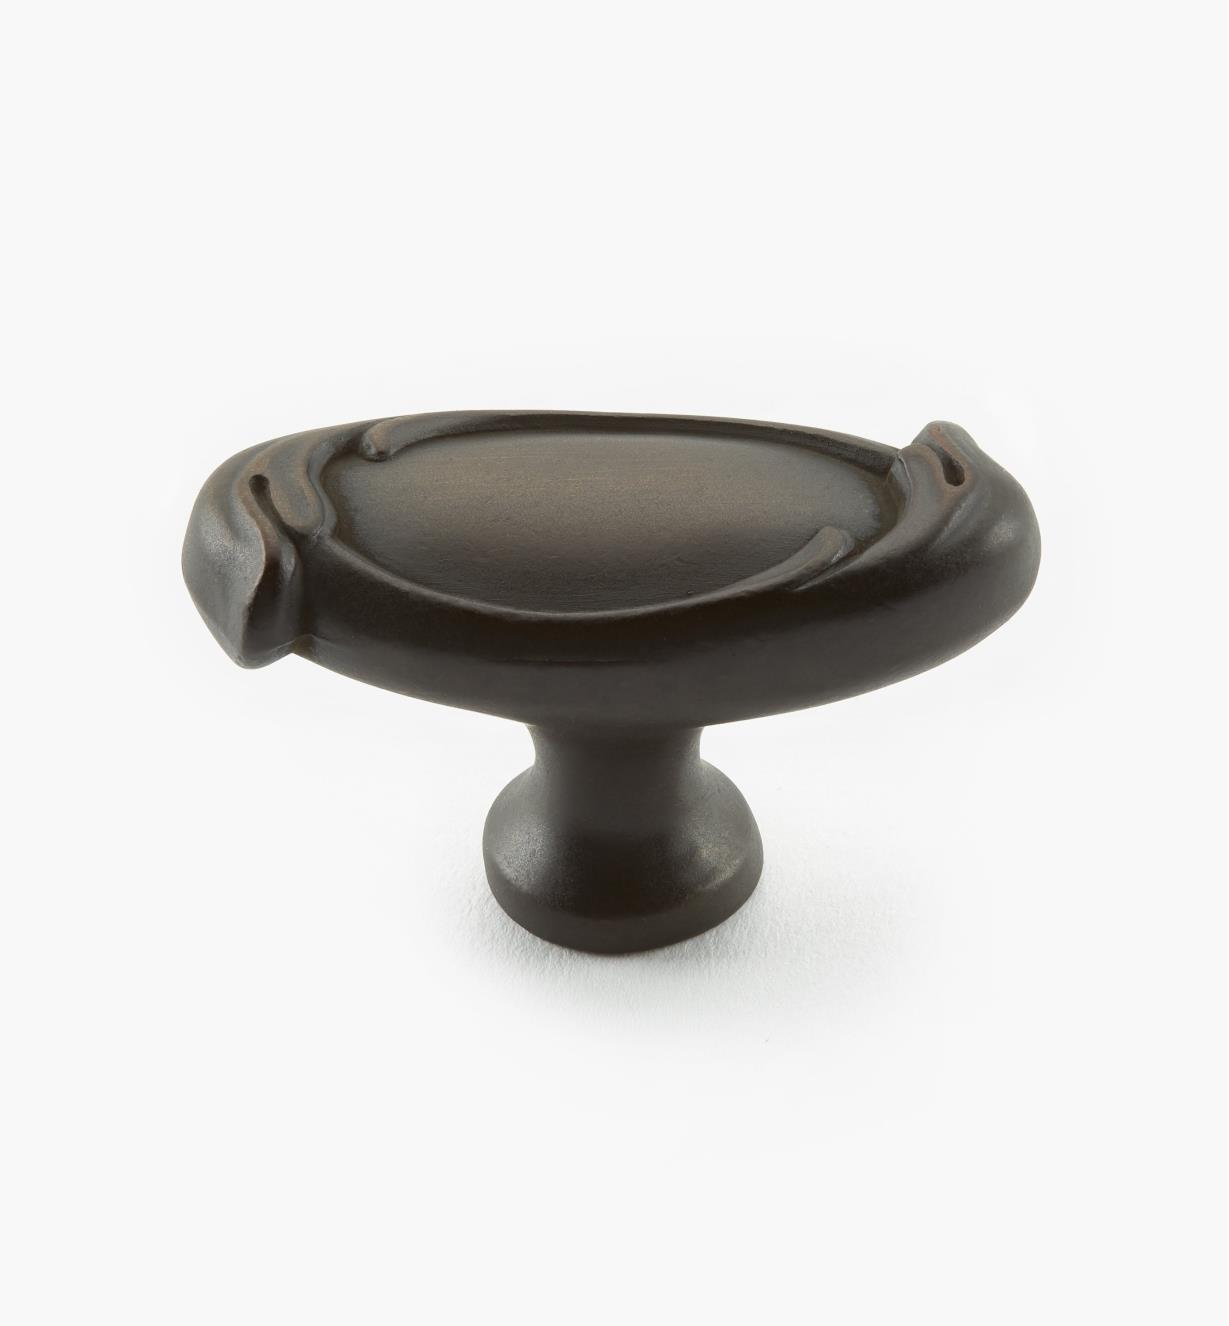 02A5251 - 2" x 15/16" Antique Bronze Oval Knob